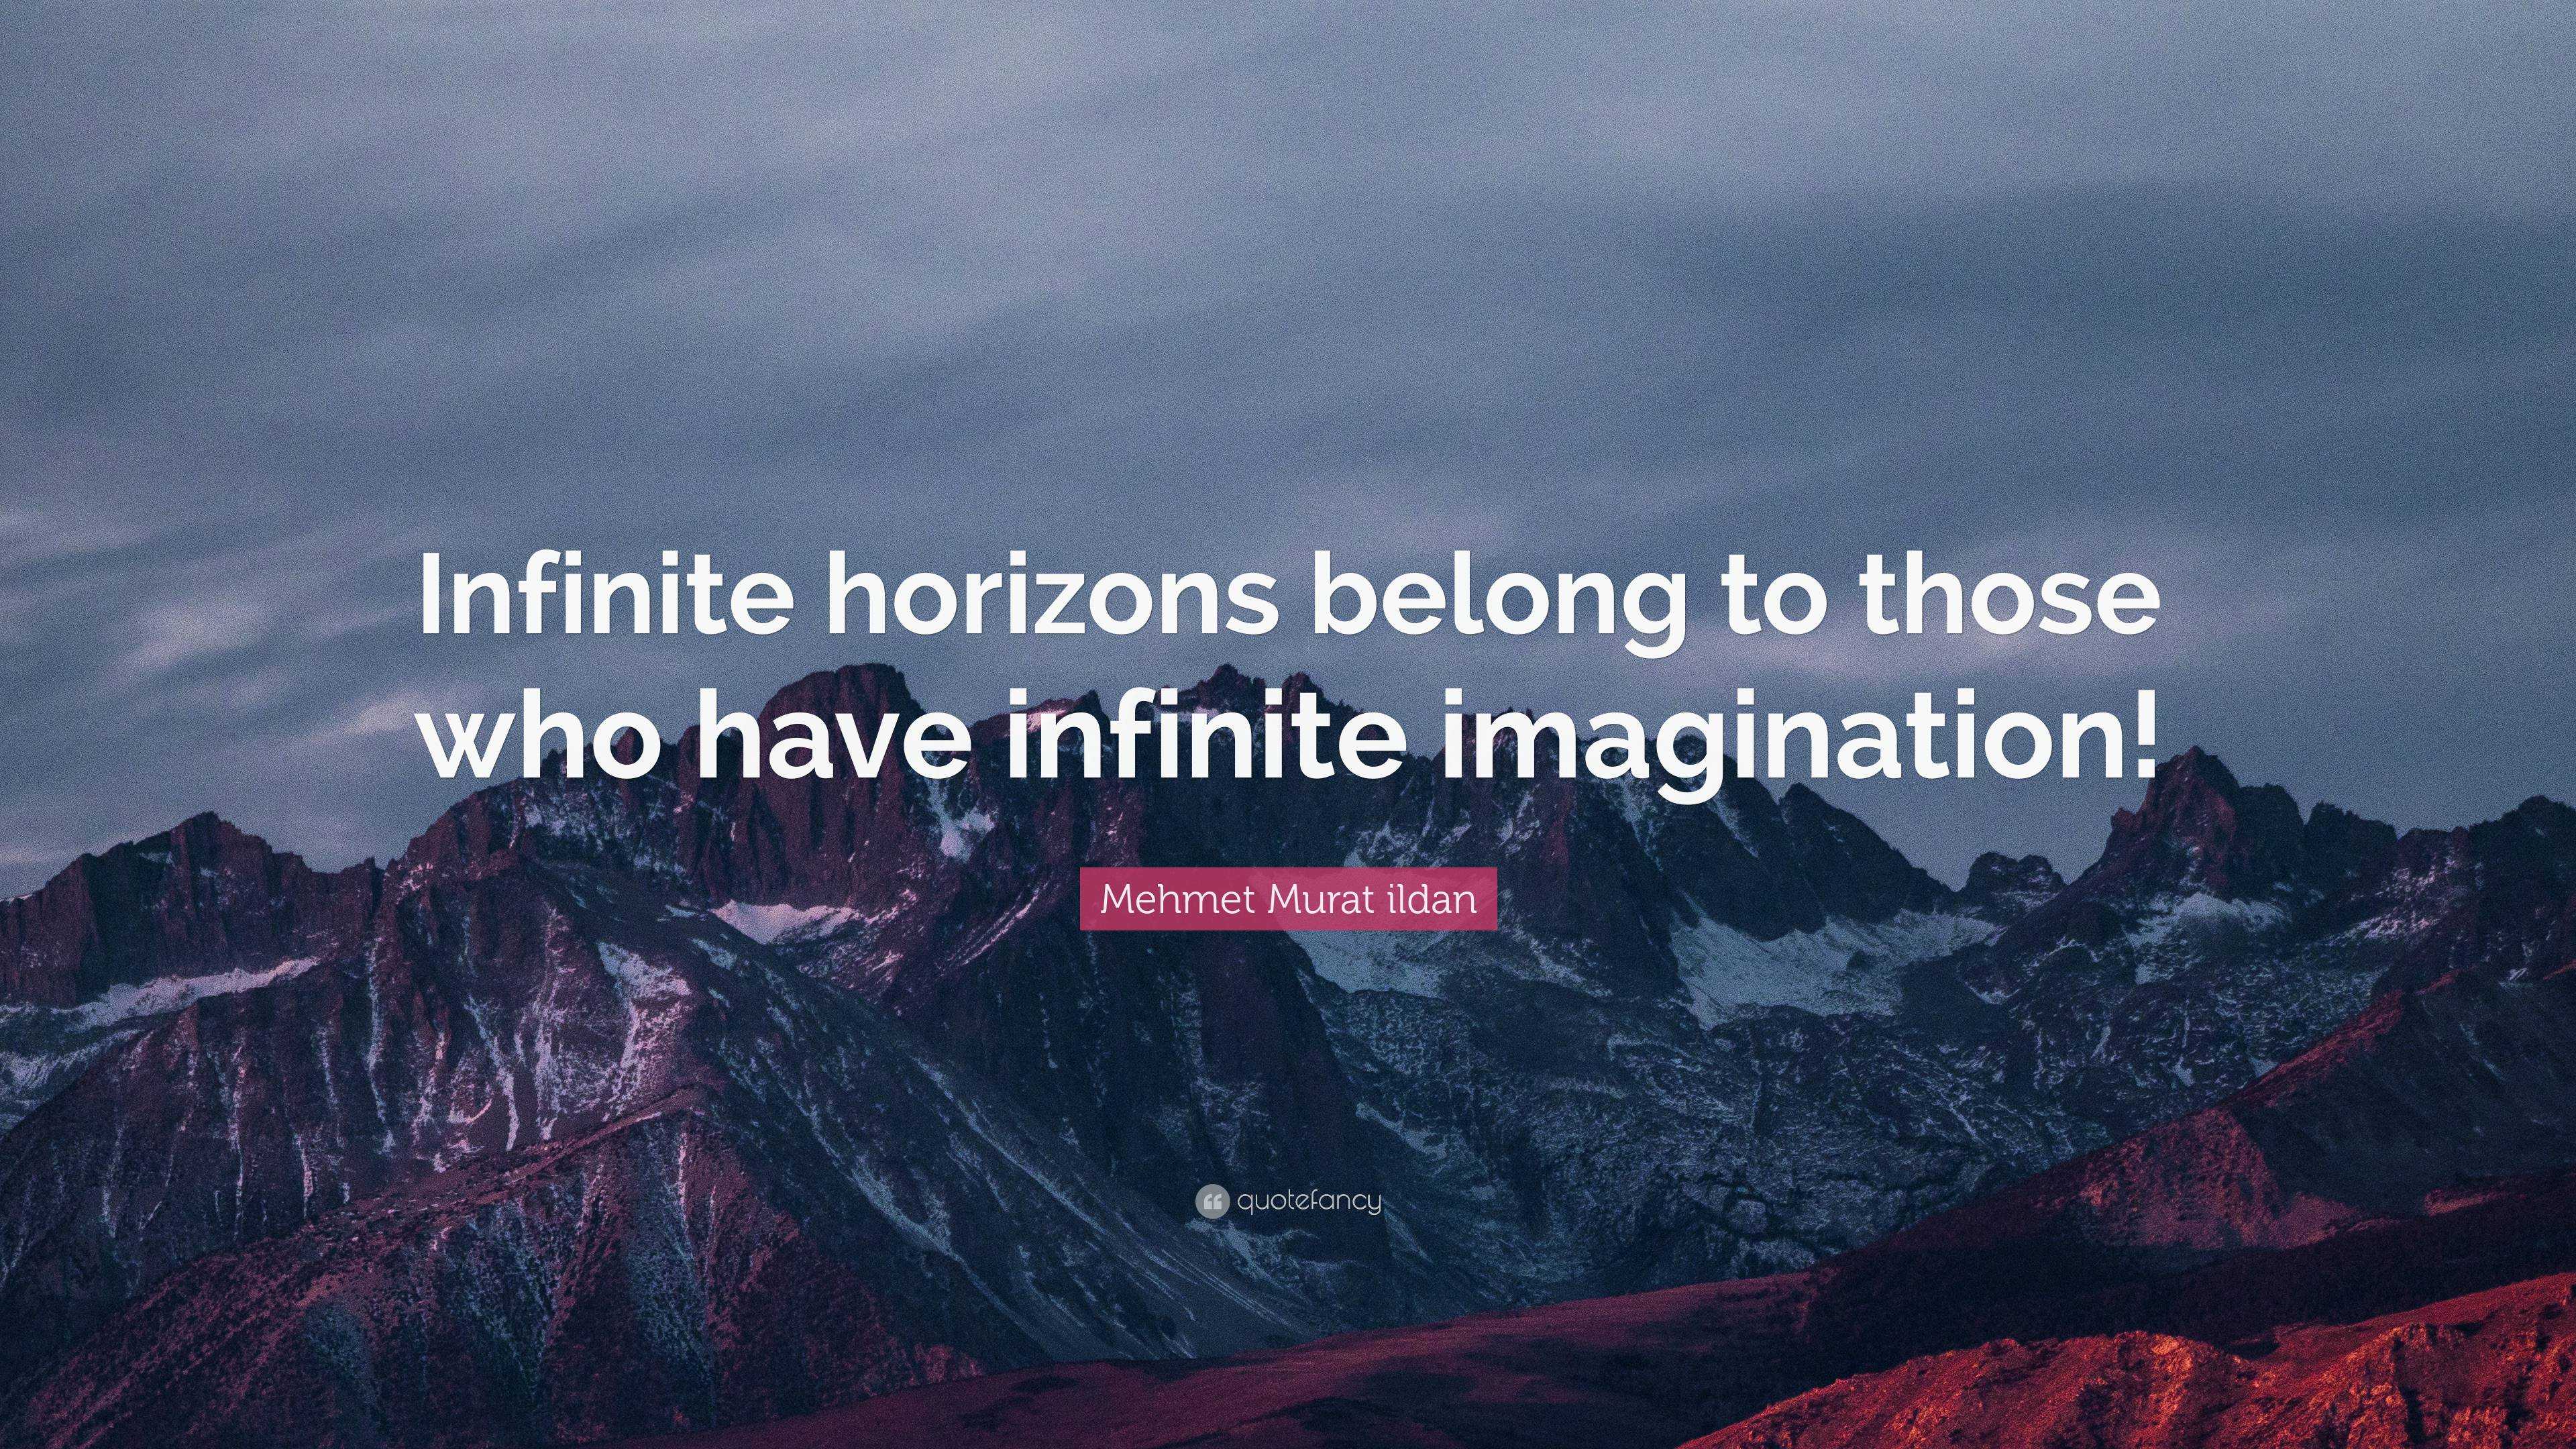 Mehmet Murat ildan Quote: “Infinite horizons belong to those who have ...